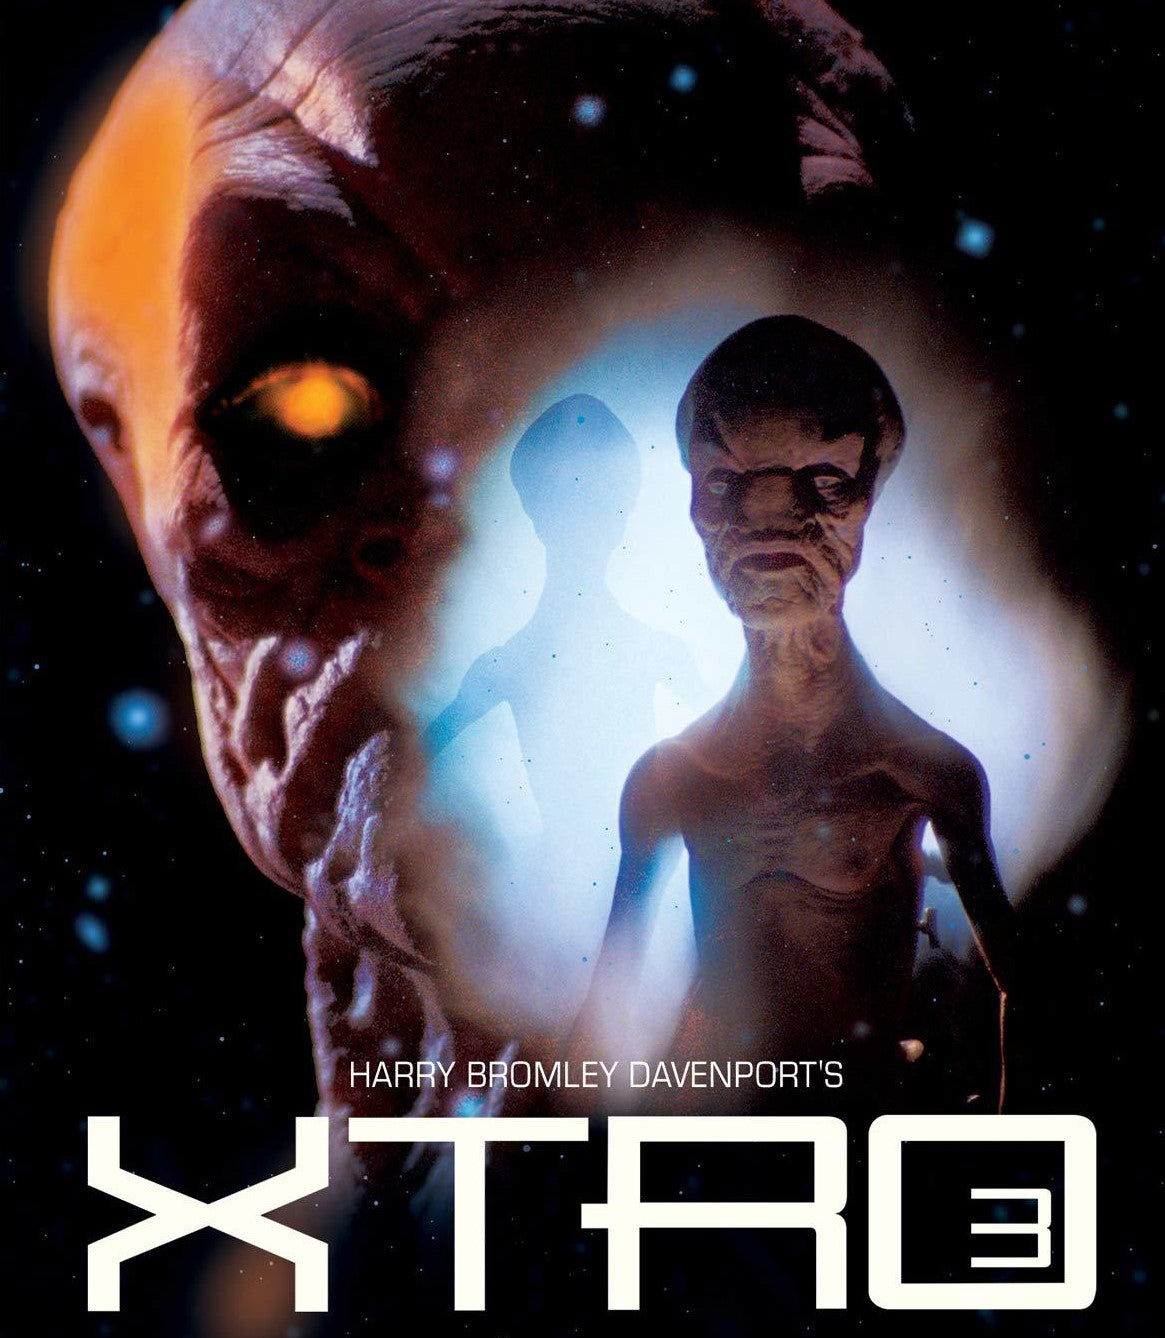 Xtro 3: Watch The Skies Blu-Ray/dvd Blu-Ray